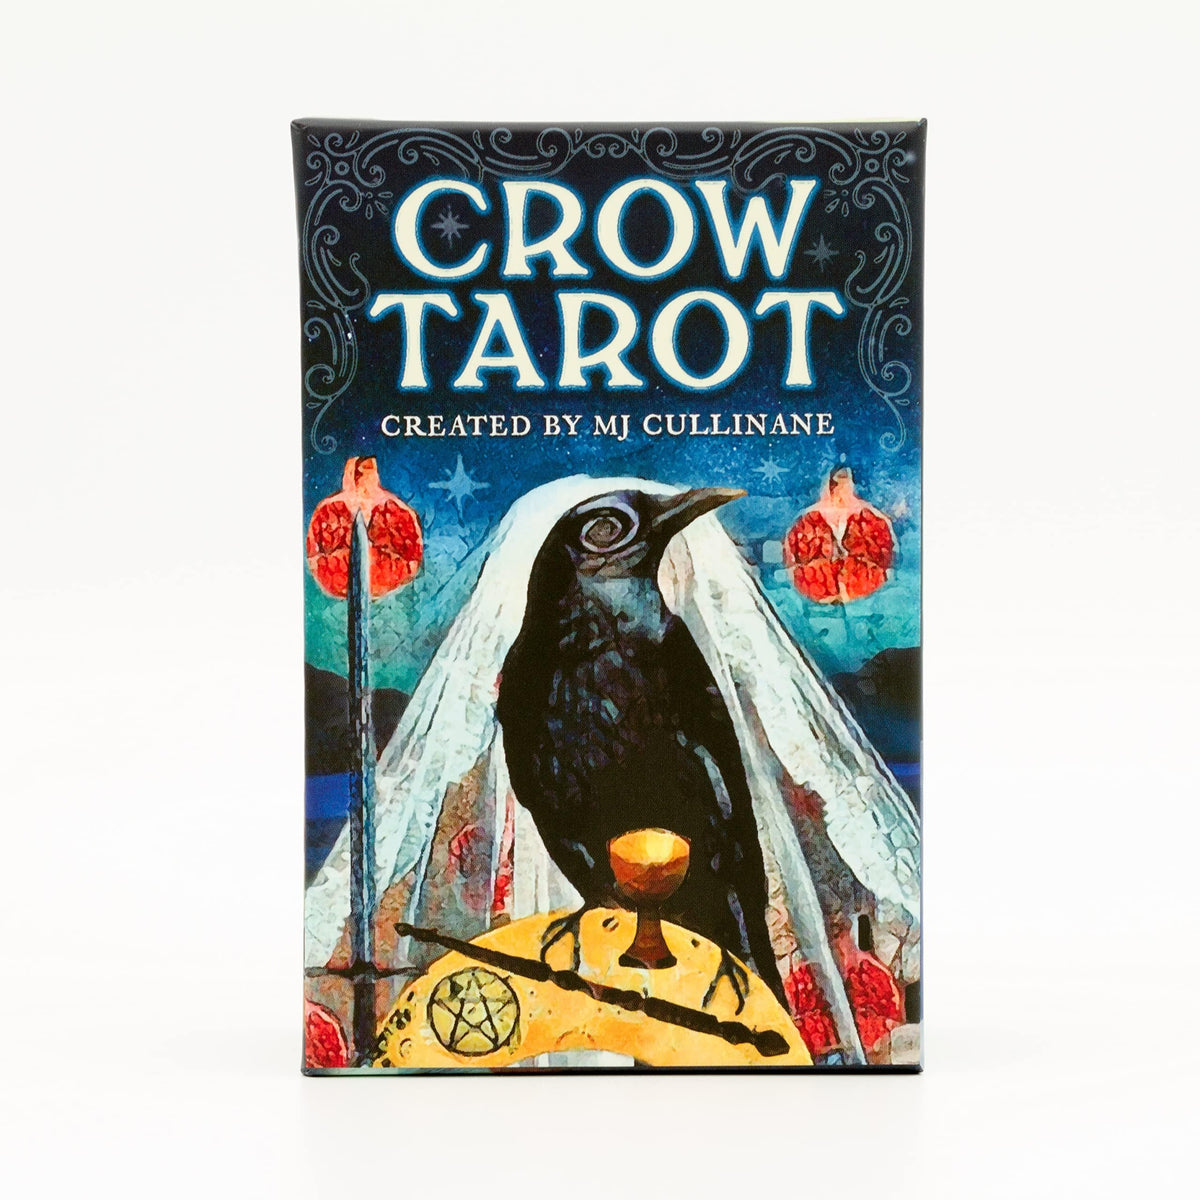 Tarot: Crow by MJ Cullinane - Third Eye